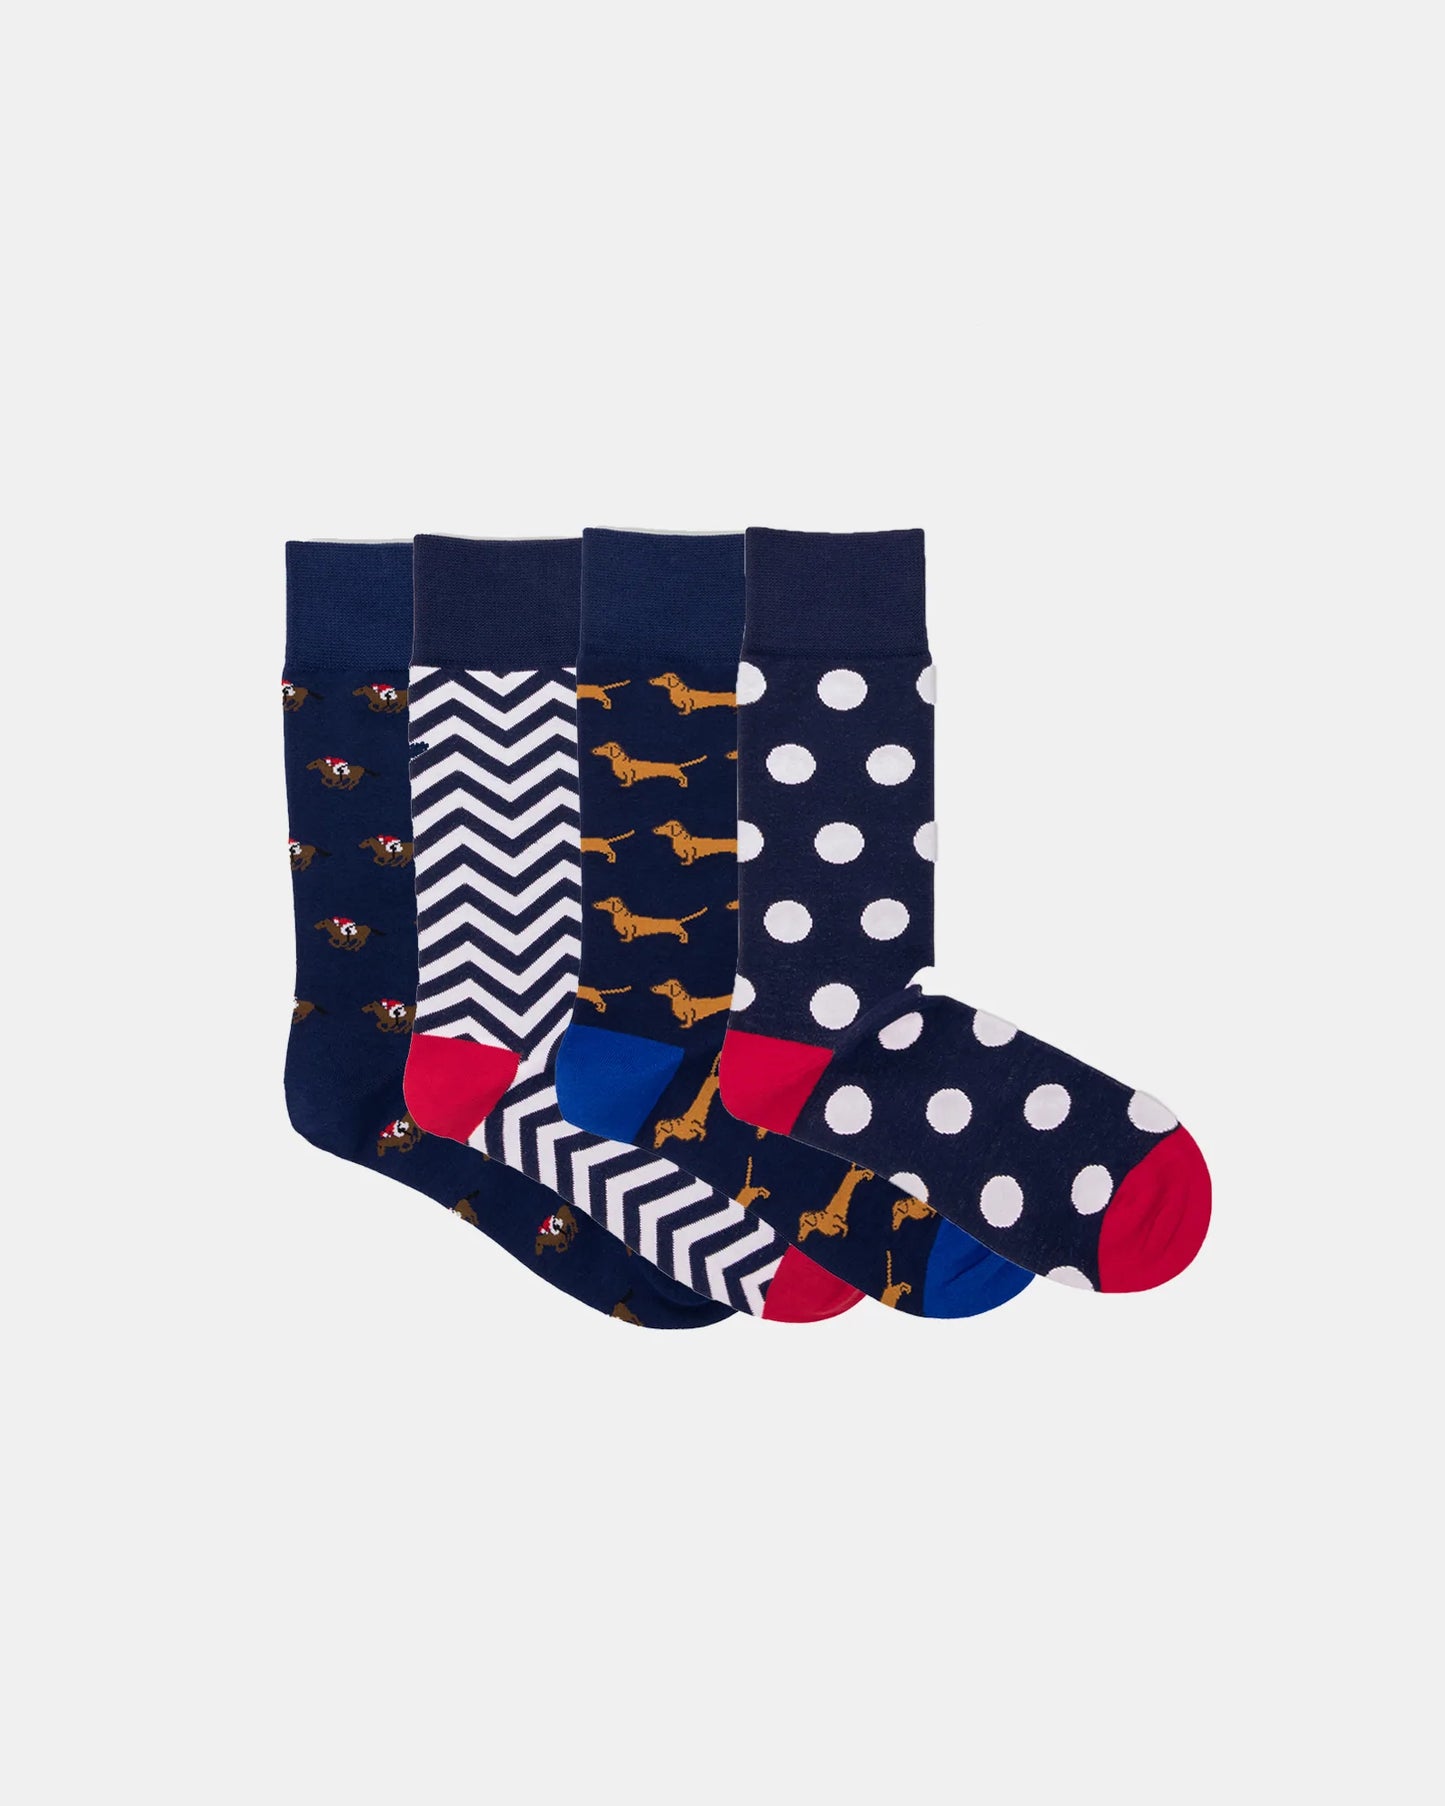 ORTC | Men’s Favourites Socks Box